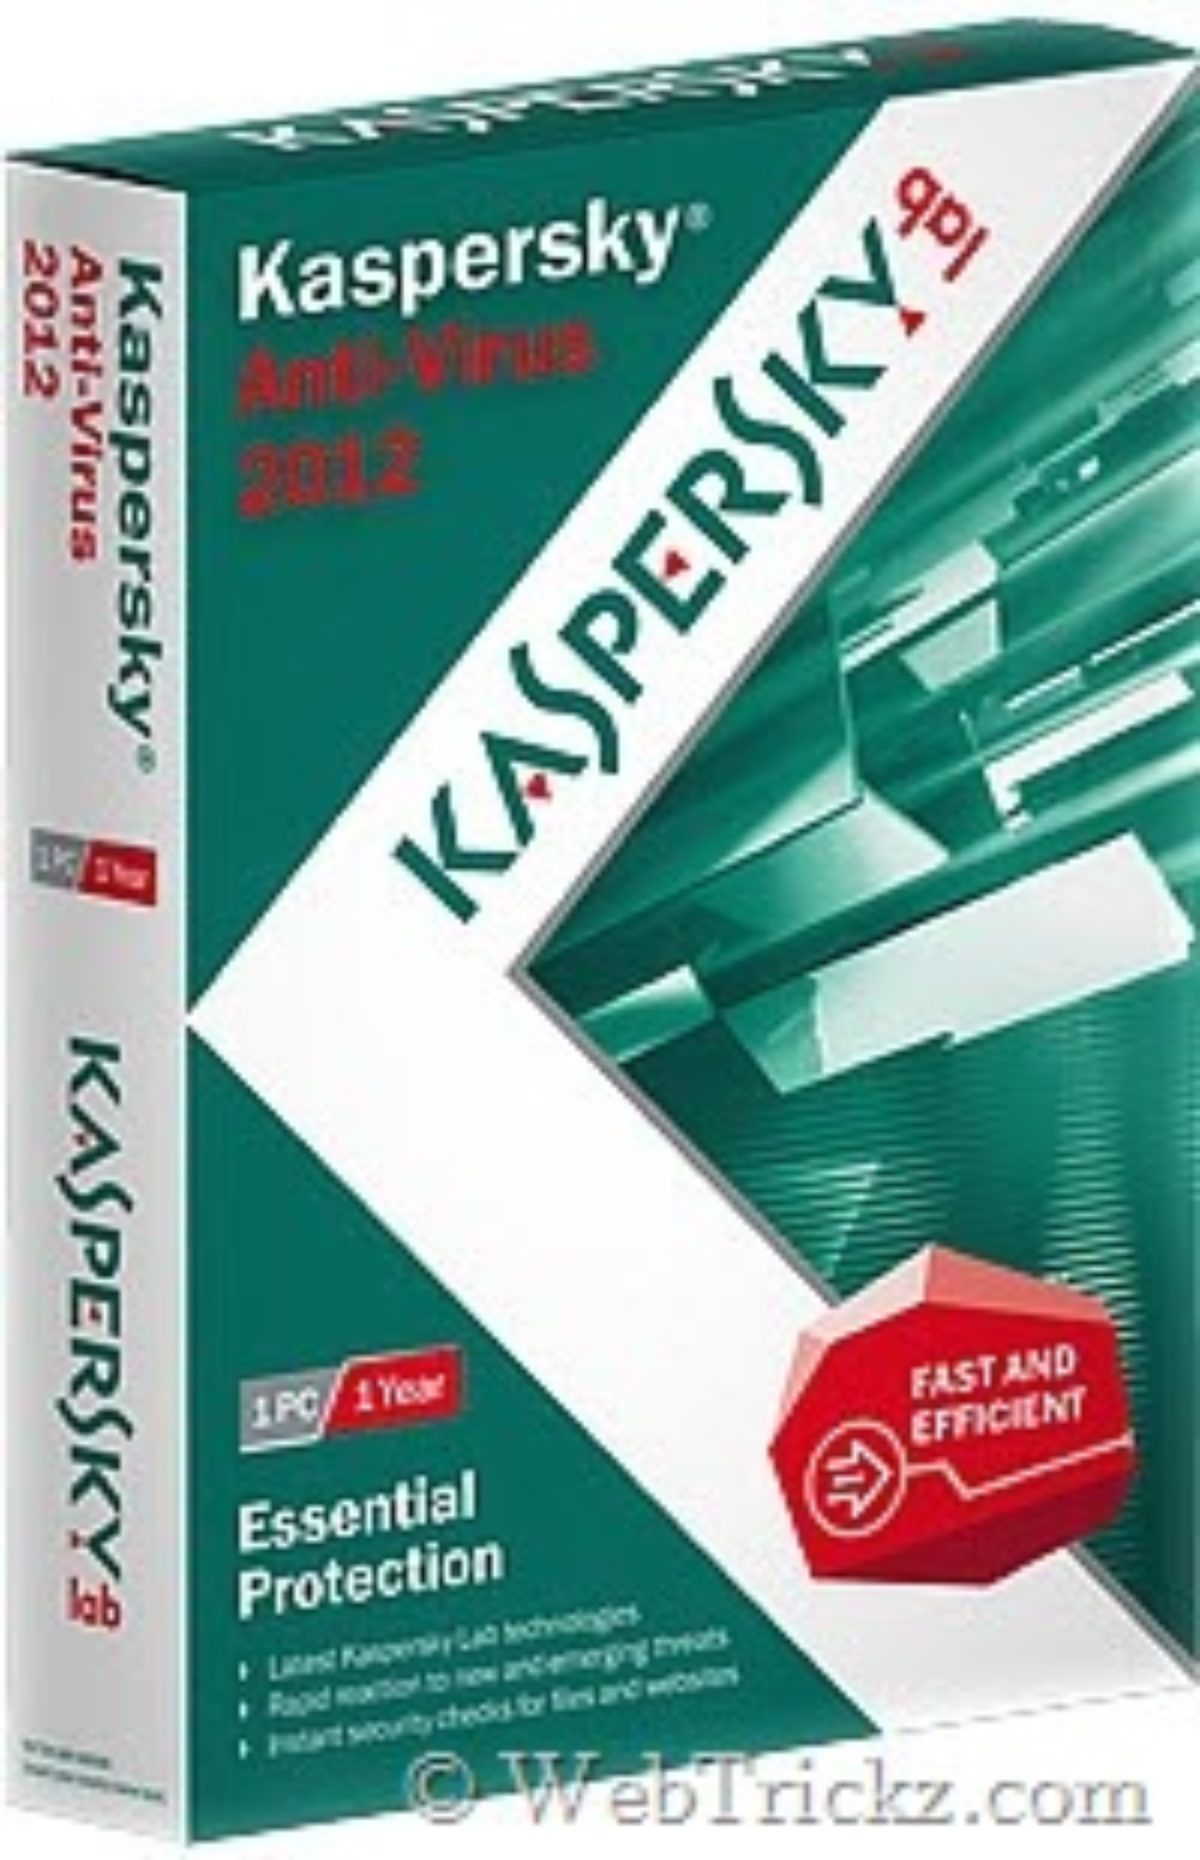 prueba kaspersky antivirus 2012